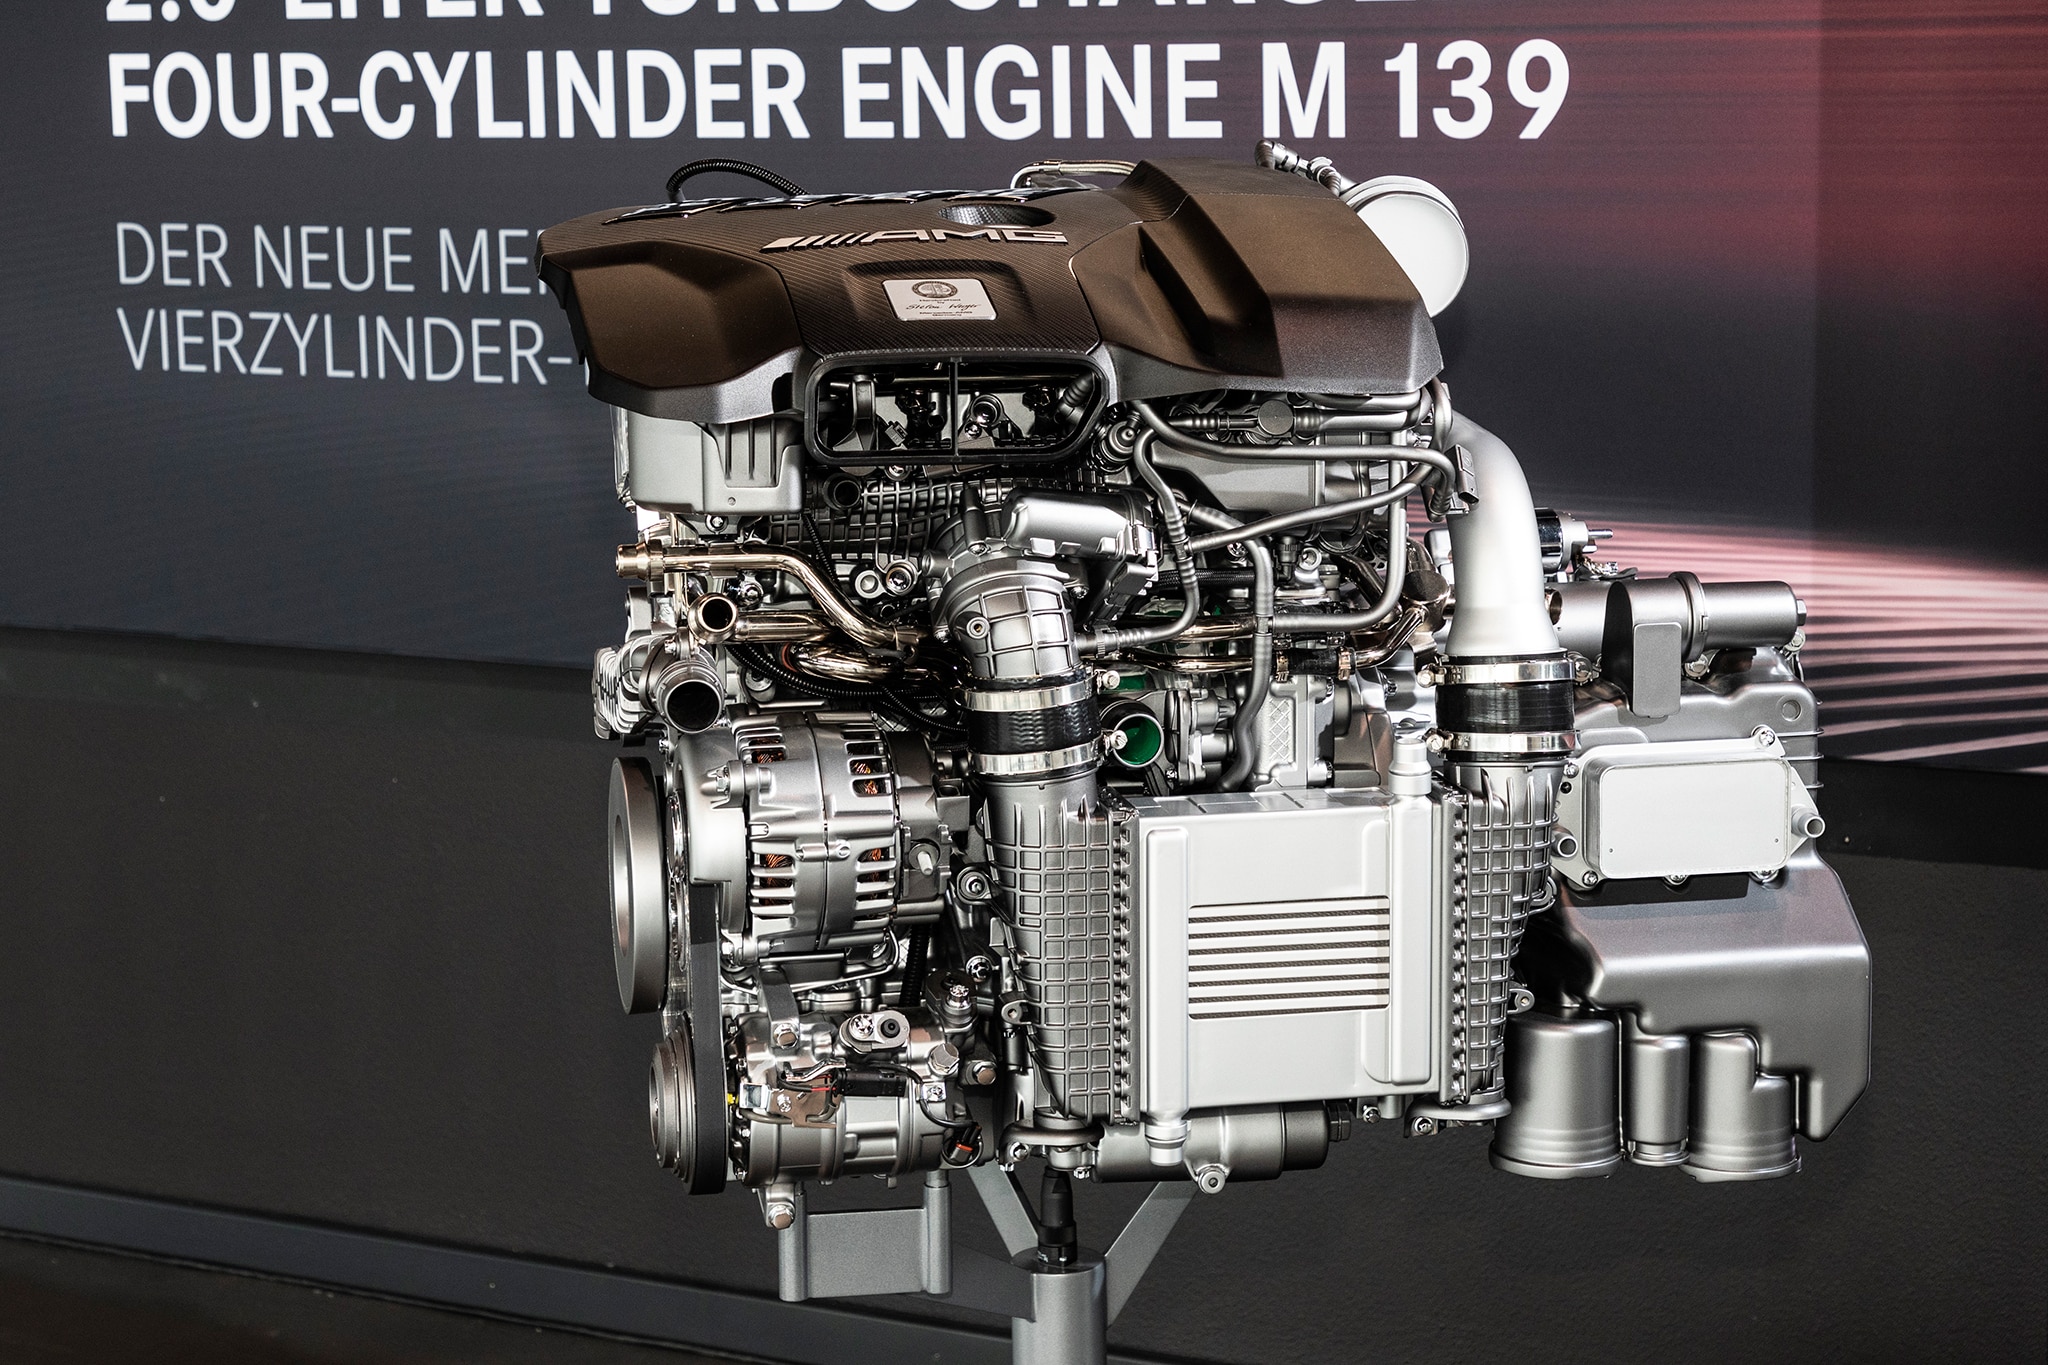 Large 4 cylinder engines